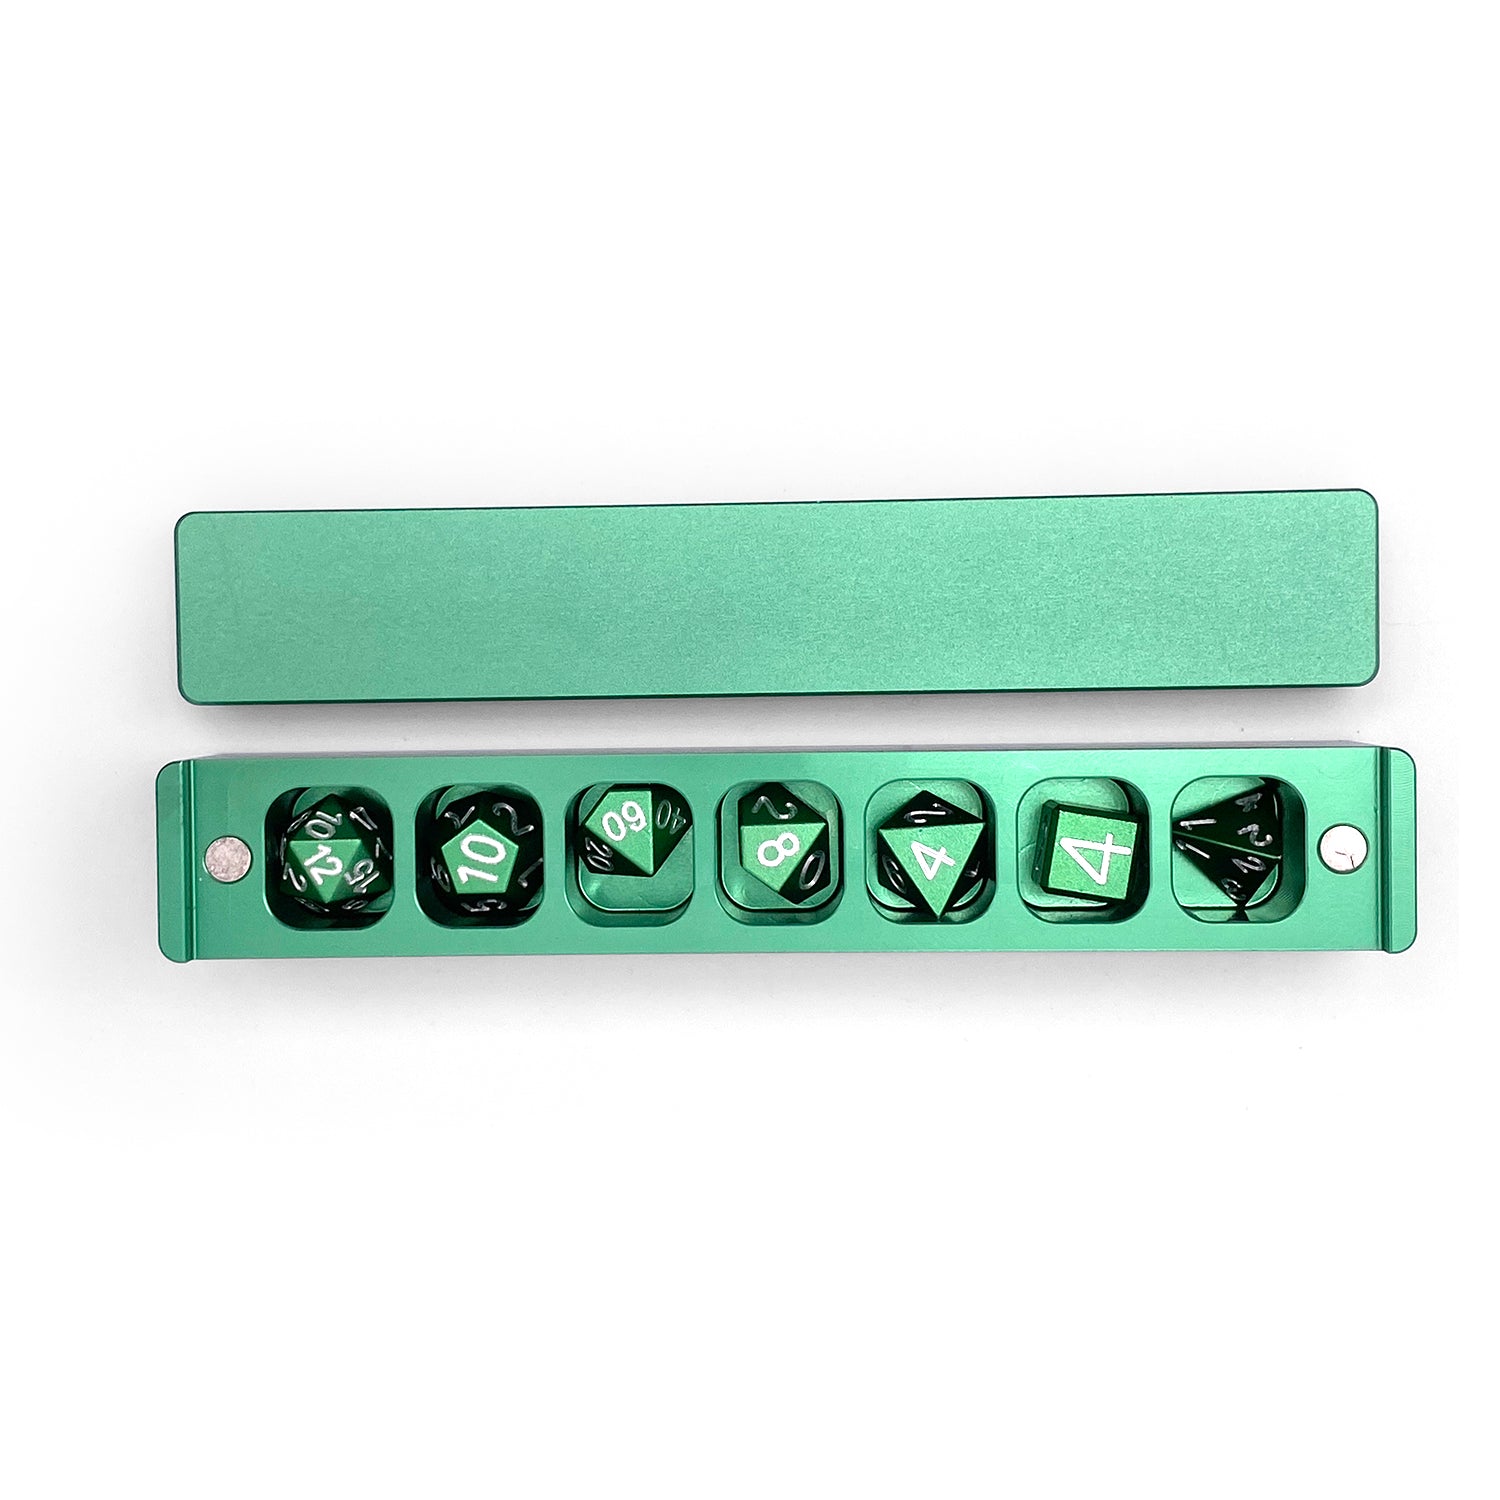 Druid Green - Pebble™ 10mm Set with Case 6063 Aluminum Dice